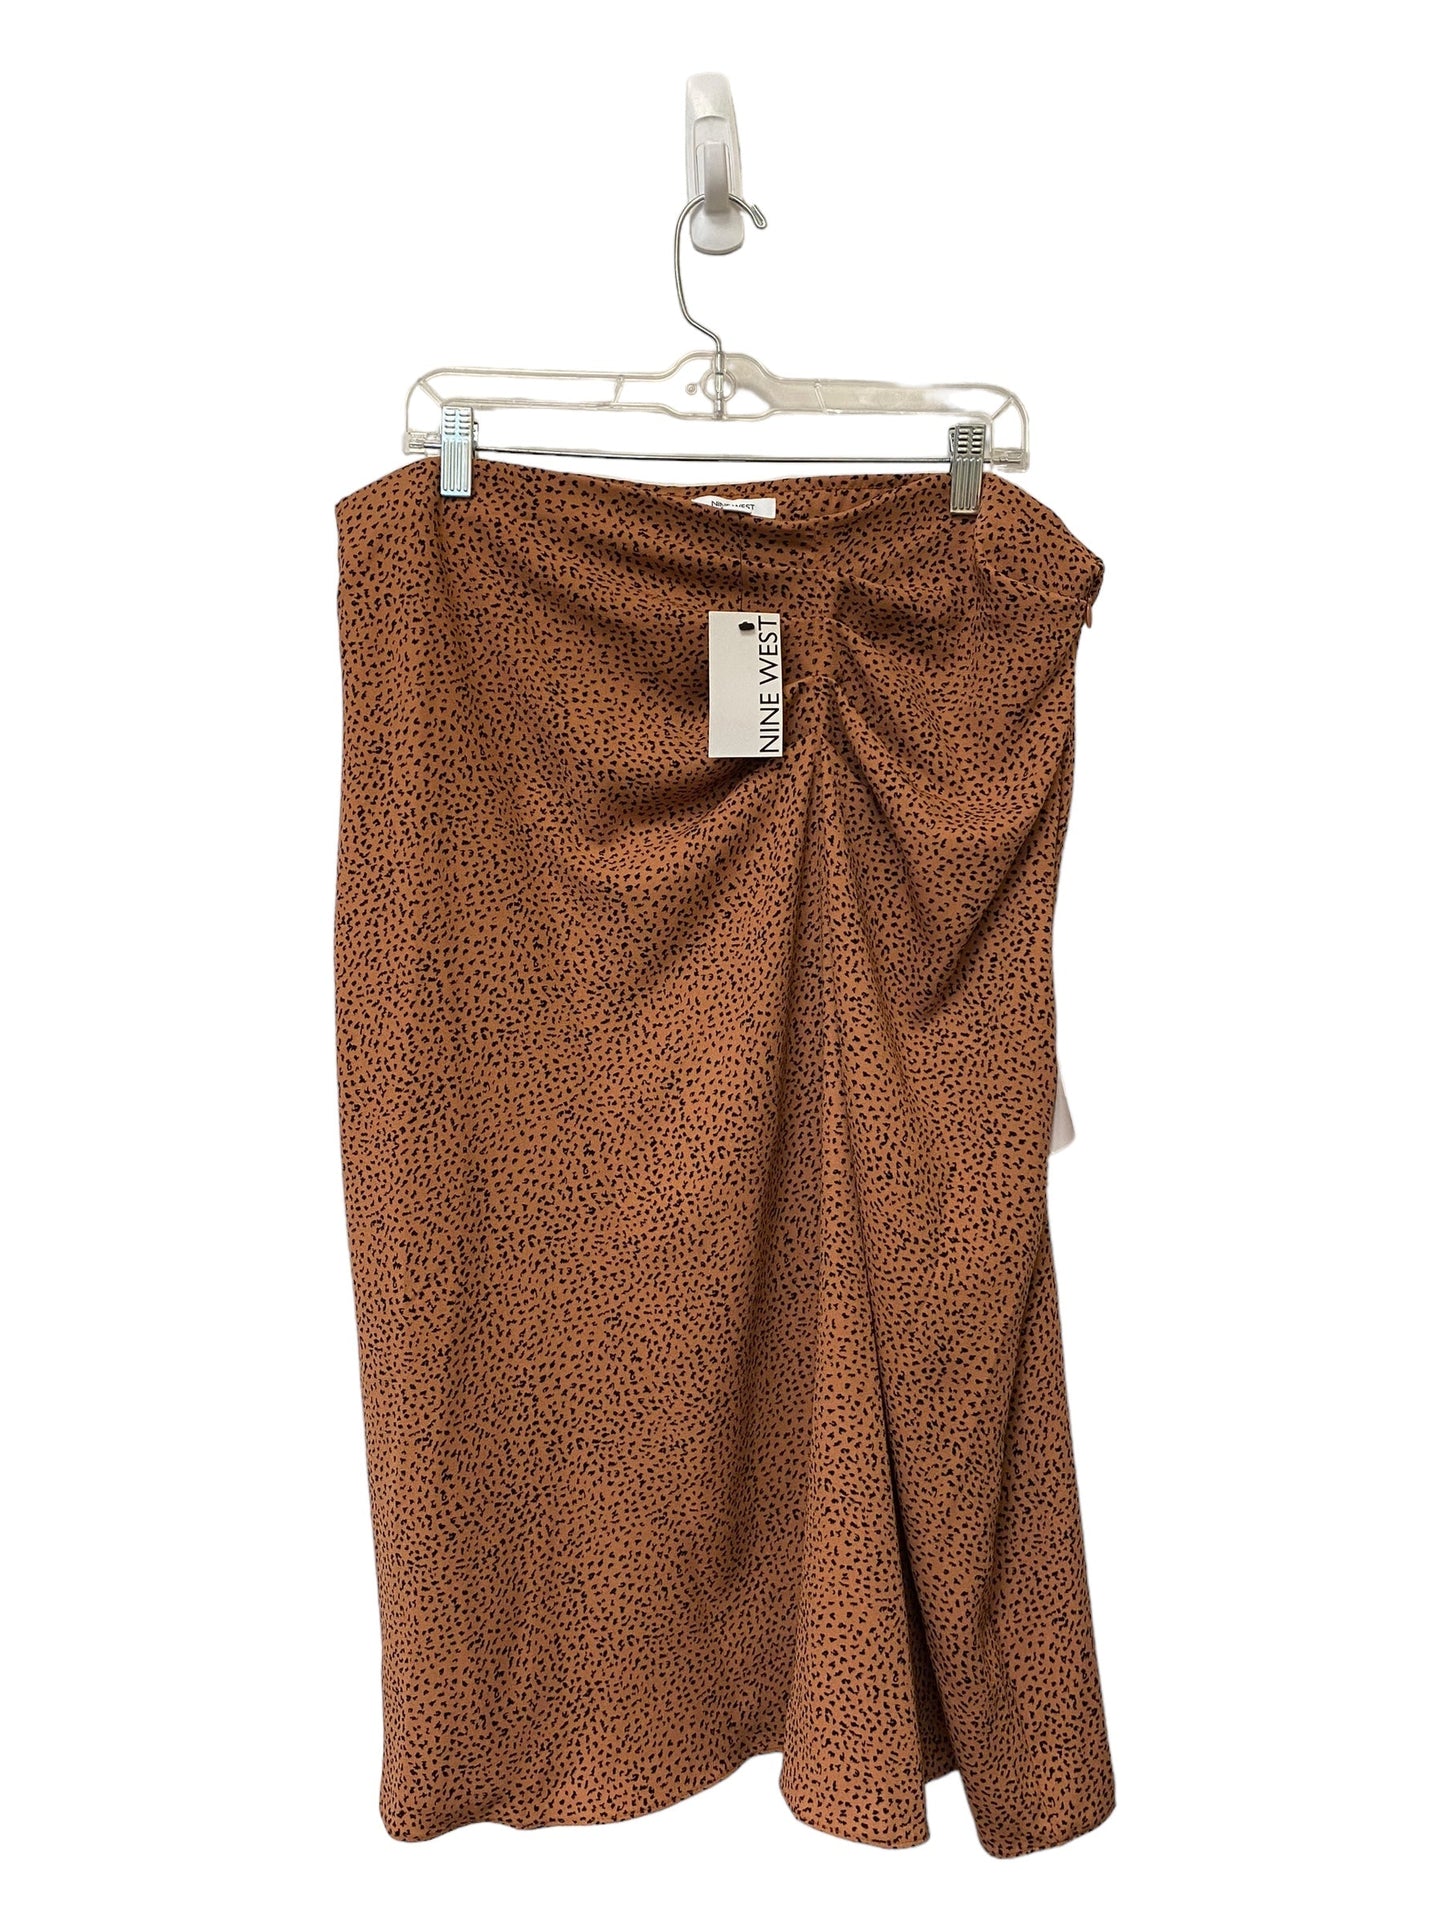 Black & Brown Skirt Midi Nine West, Size Xl